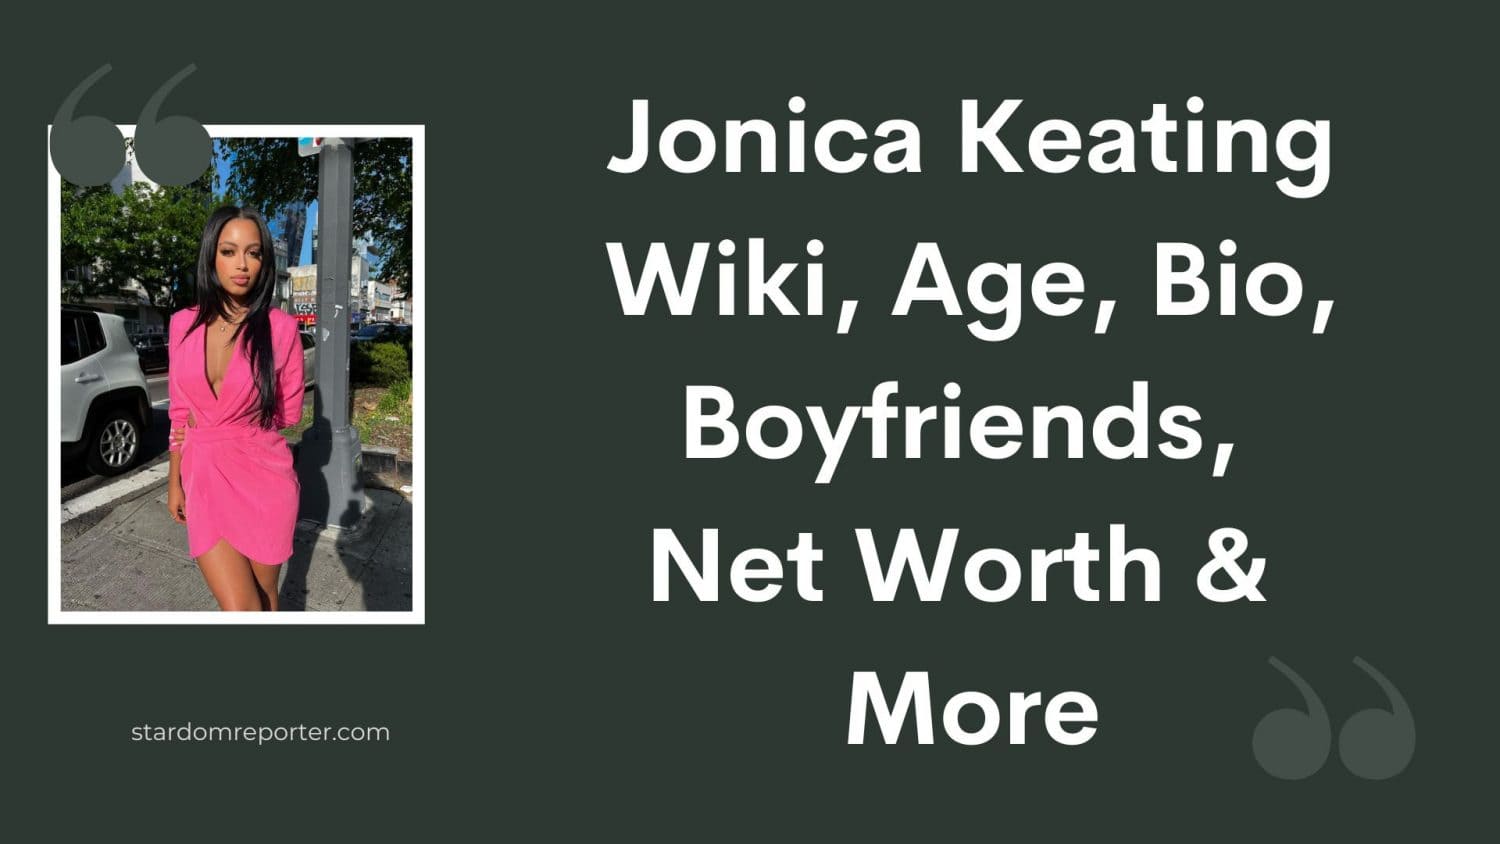 Jonica Keating Wiki, Age, Bio, Boyfriends, Net Worth & More - 45